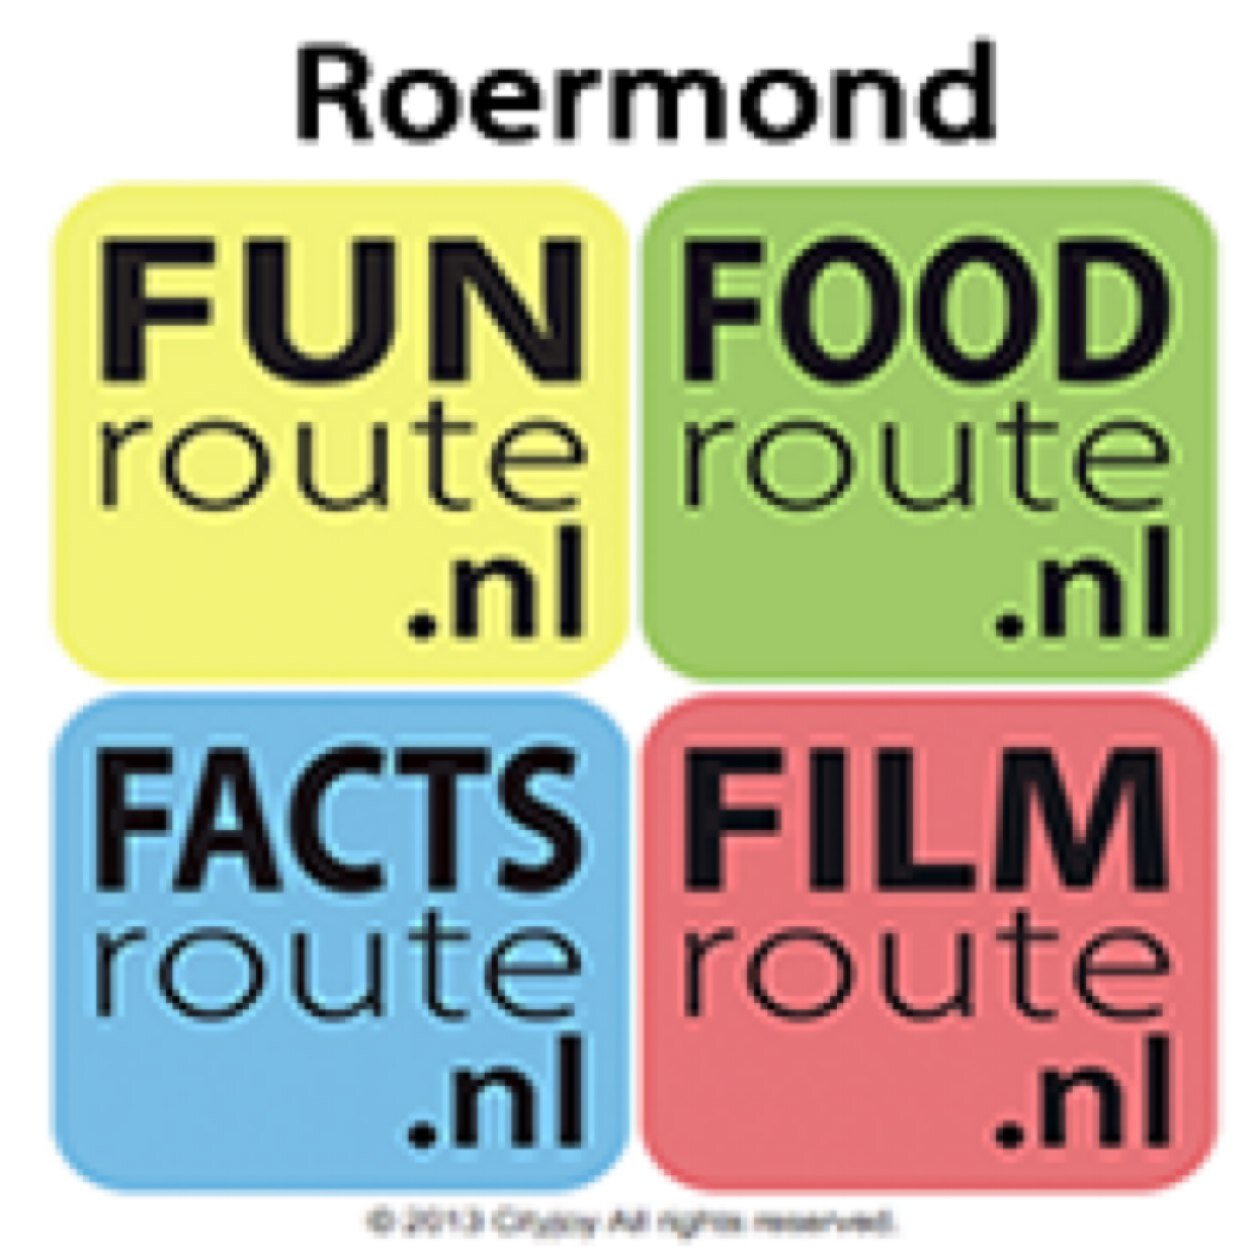 Filmpjes over Roermond online, Cultuur, Sport, Muziek, Vastelaovend en nog veel meer, het groeit elke dag, volg ons !!!  http://t.co/UIH3EXU3hk